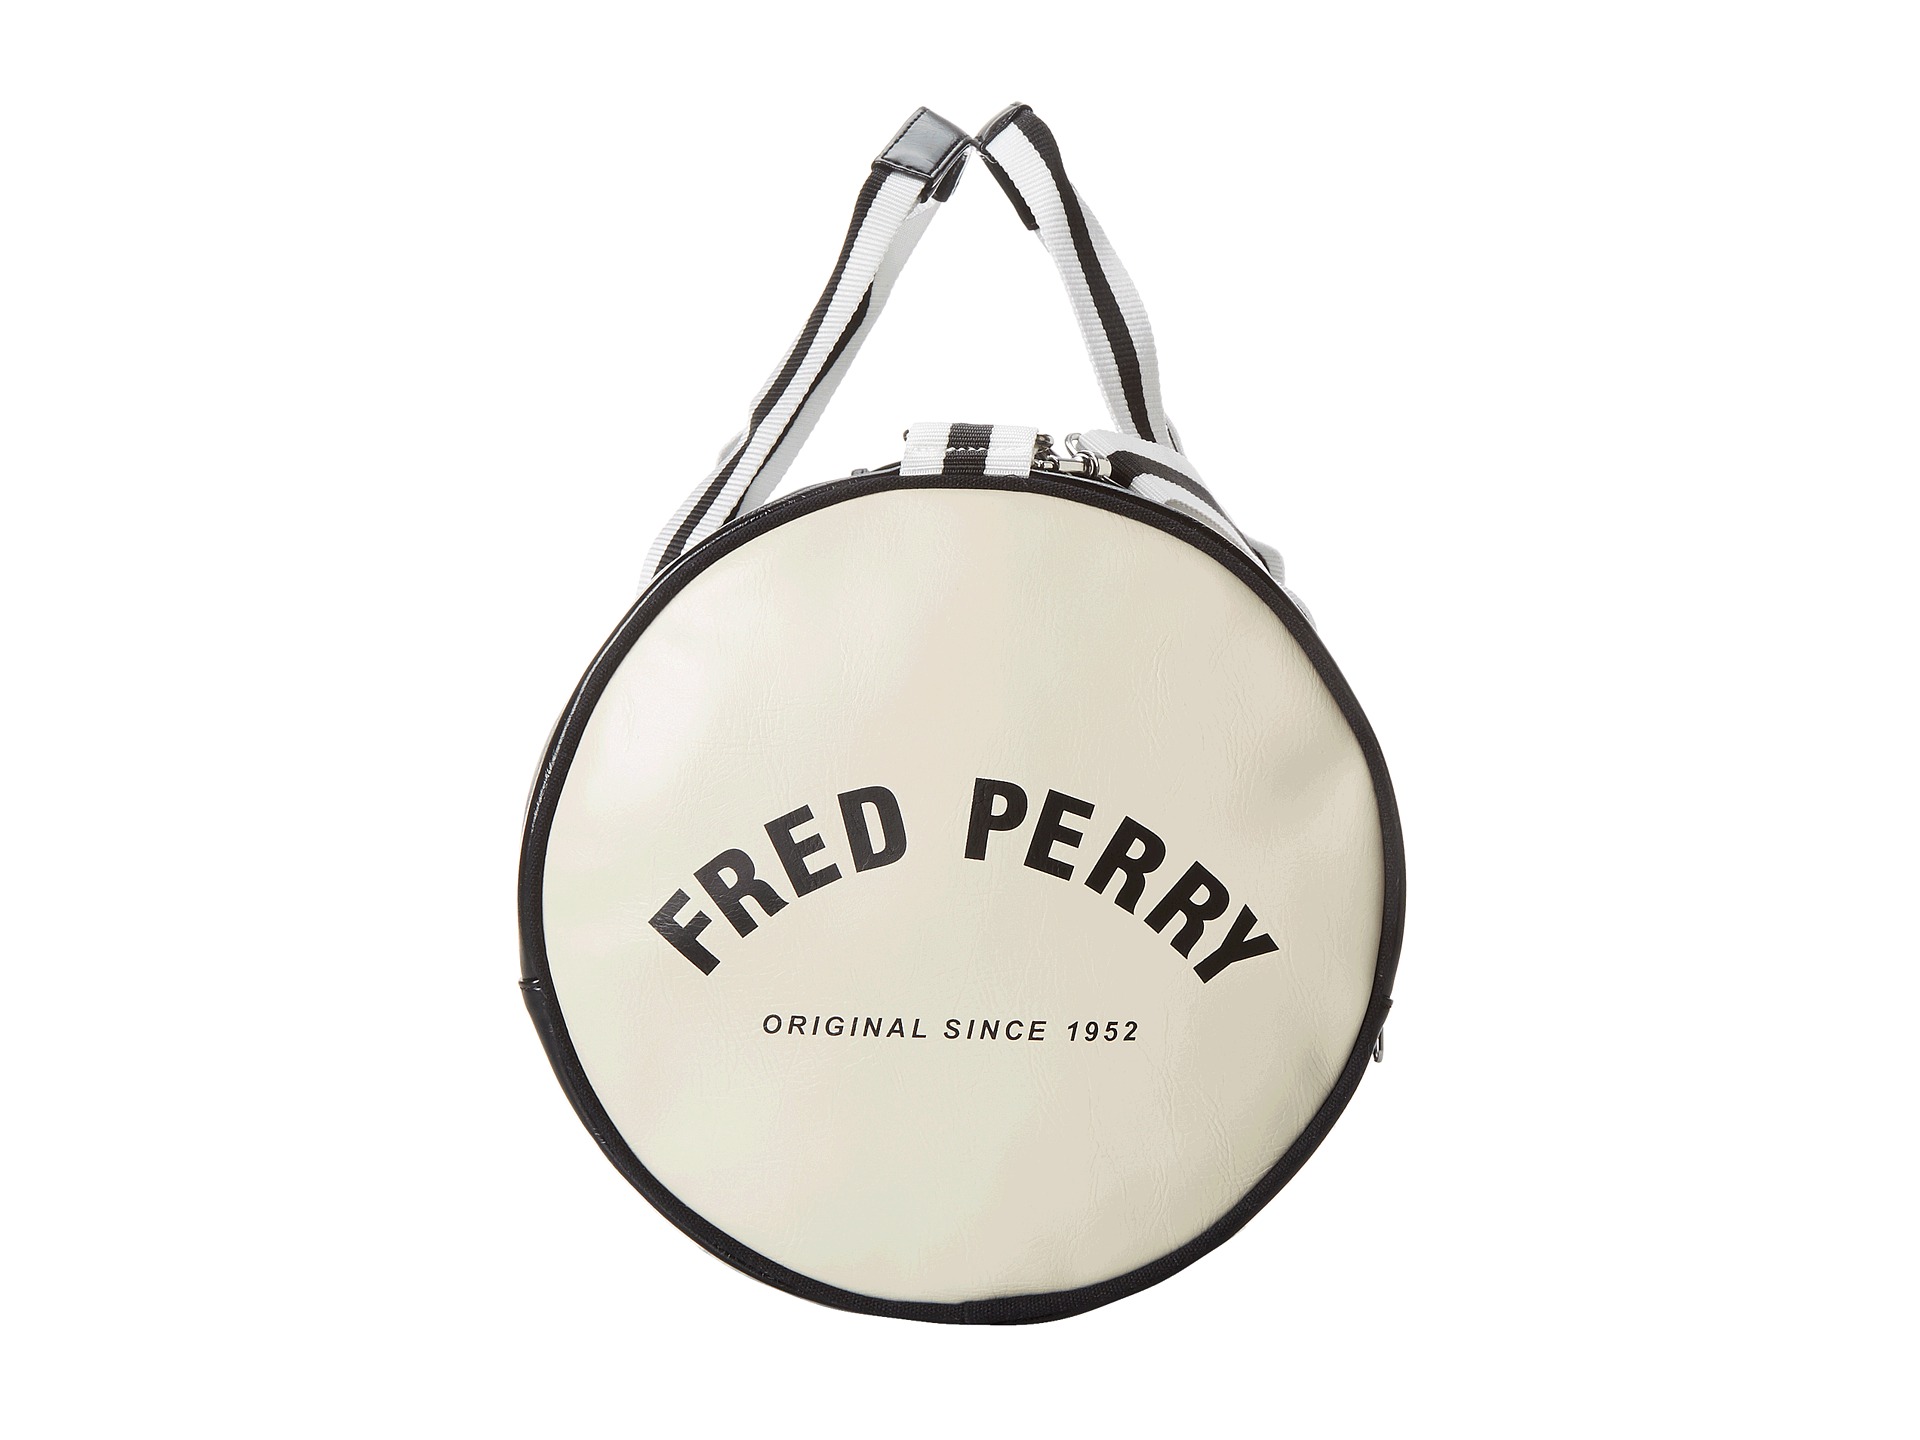 Fred Perry Classic Barrel Bag at Zappos.com